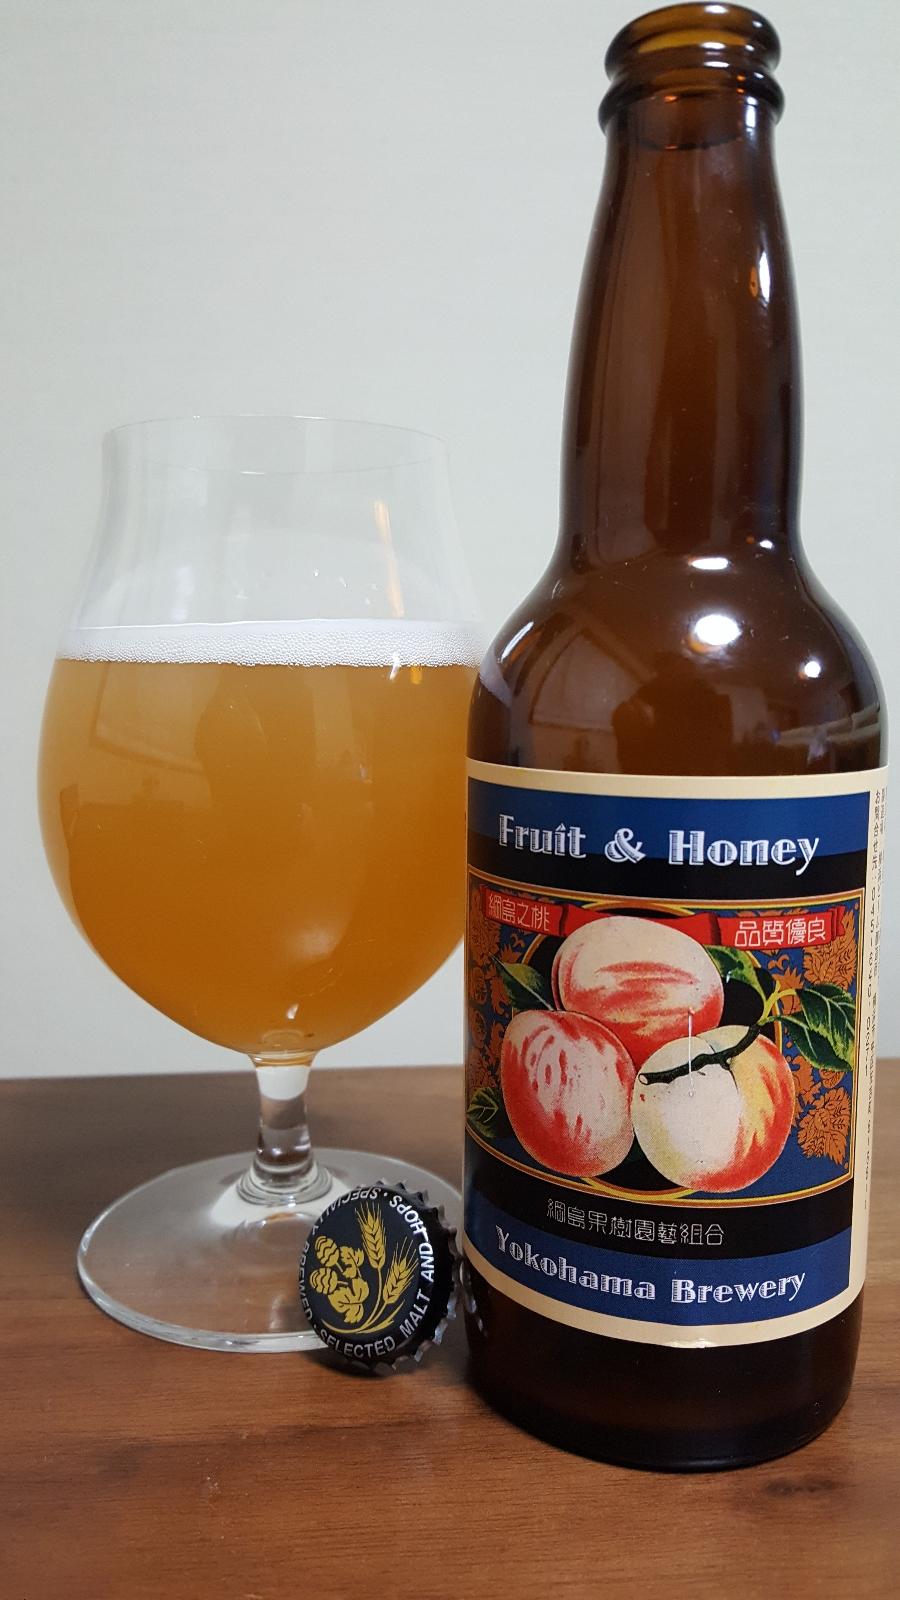 Fruits & Honey